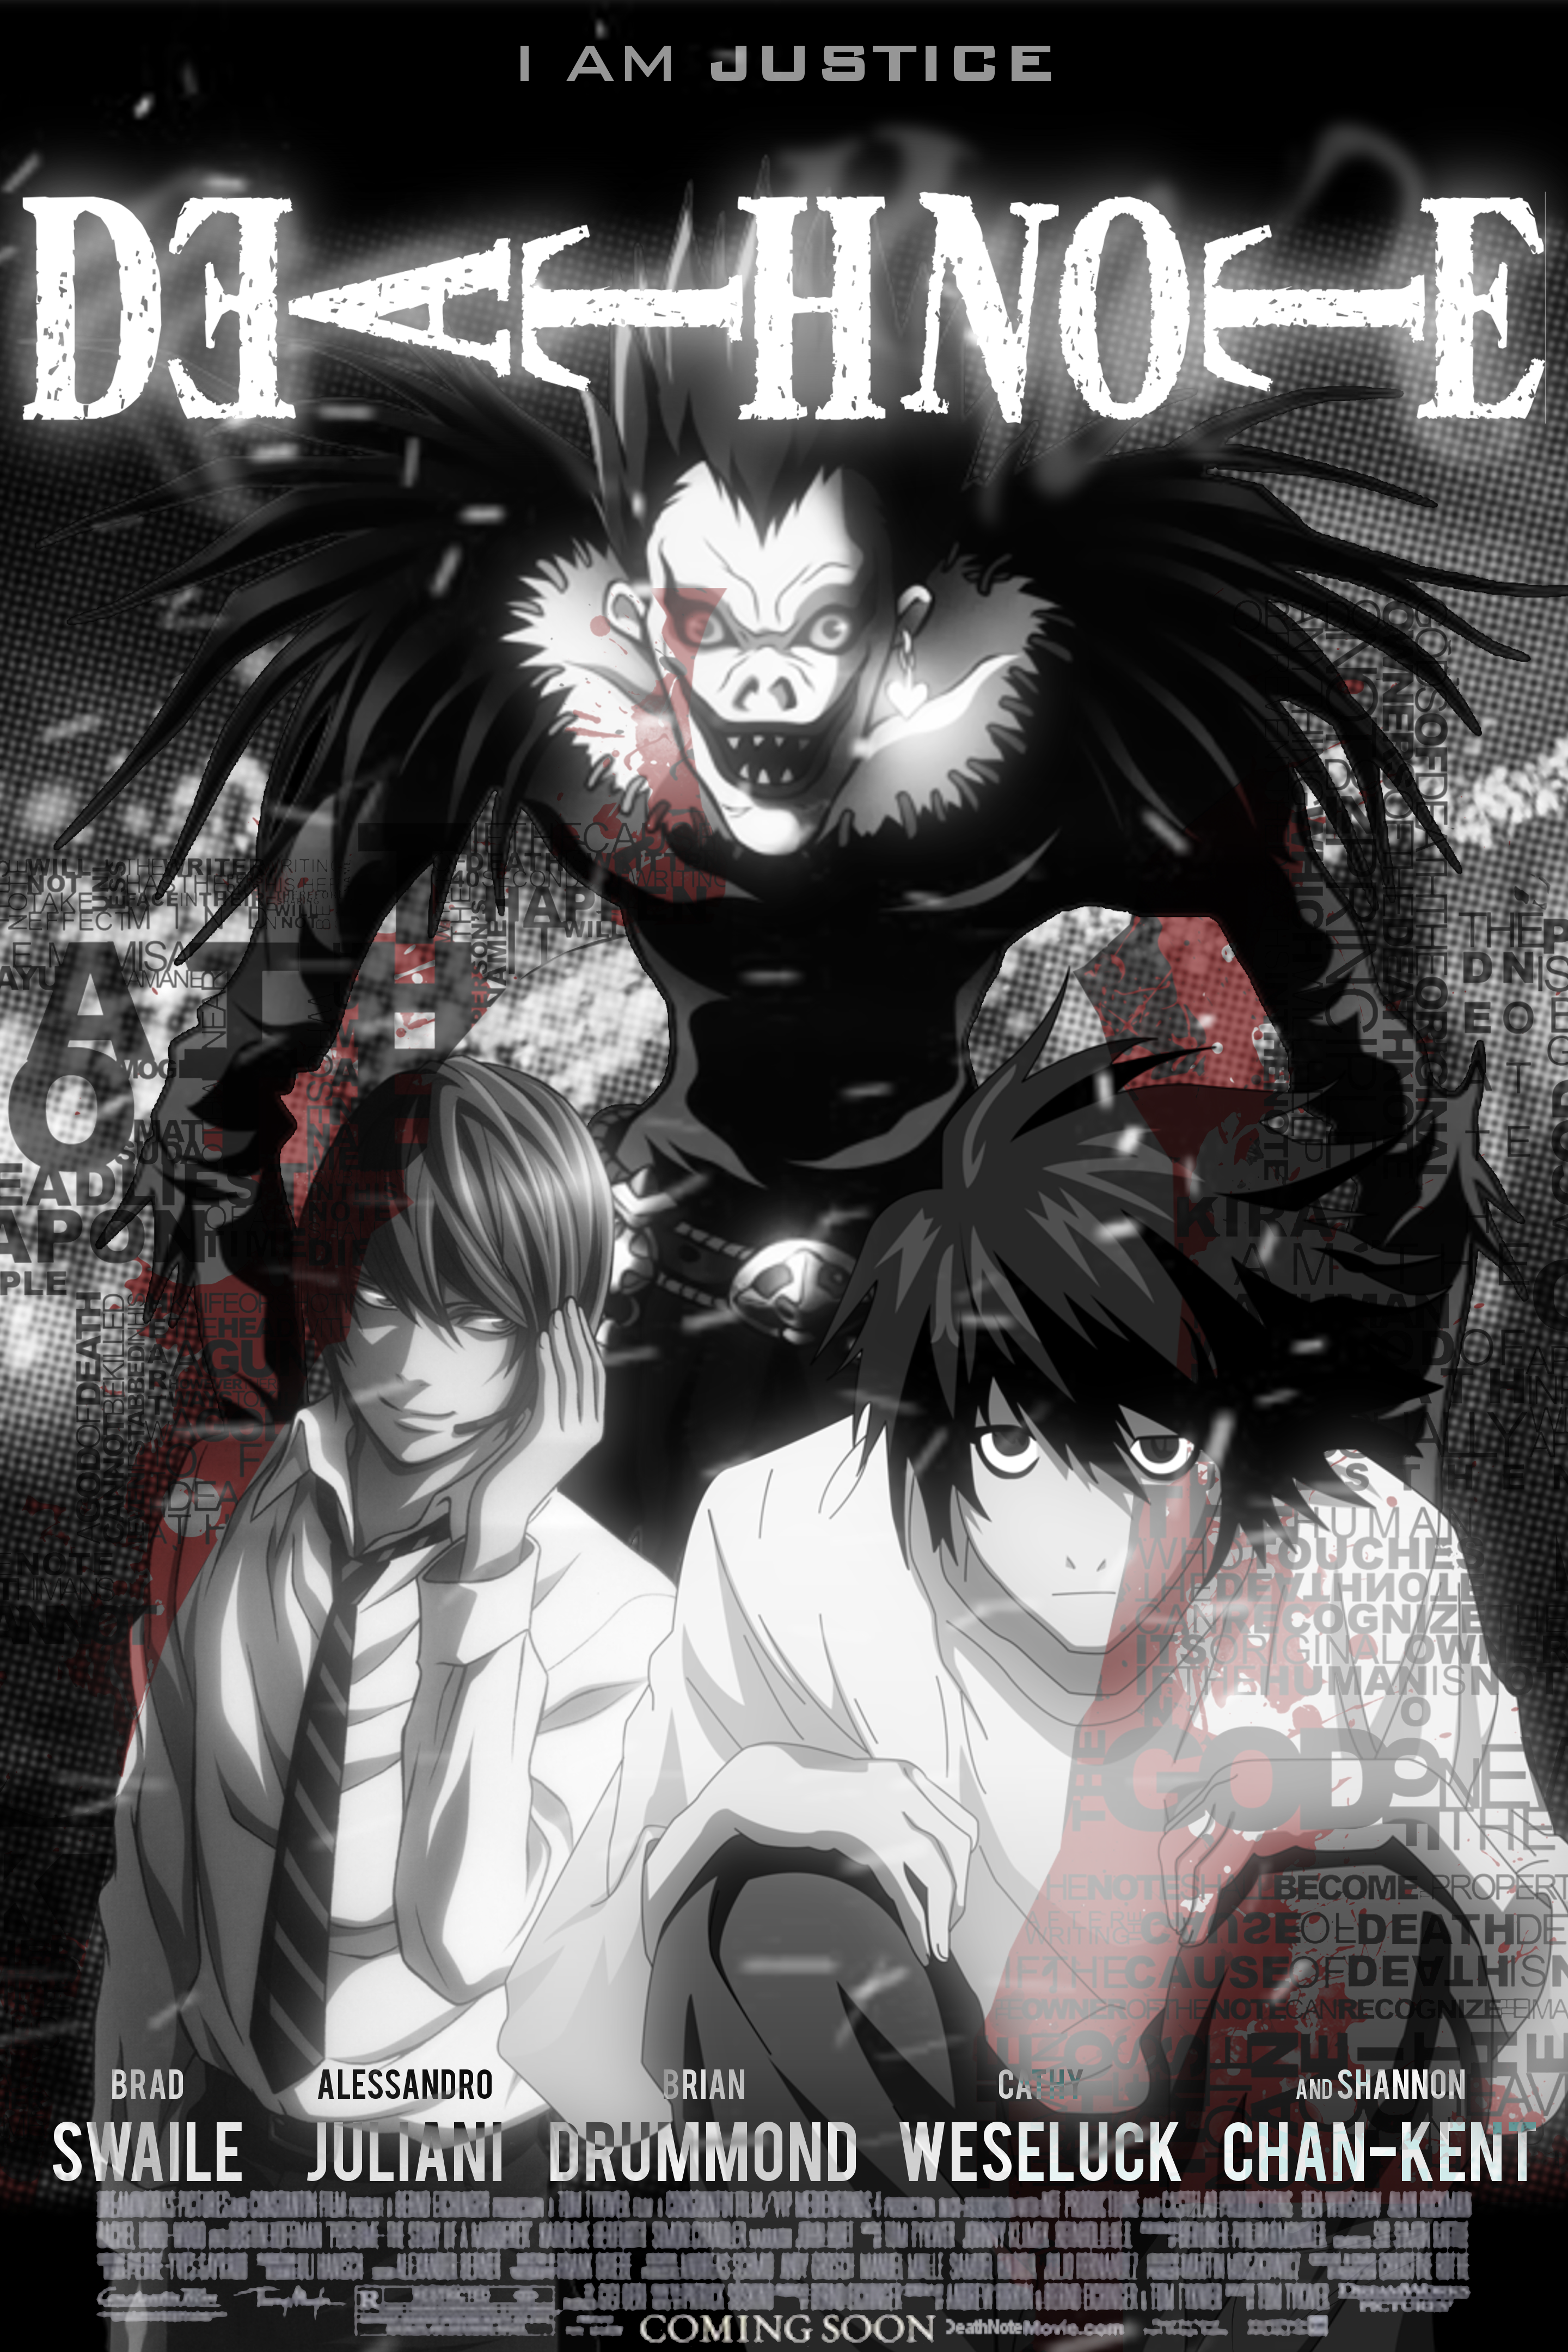 Death Note - Movie Poster by sicariusftw on DeviantArt